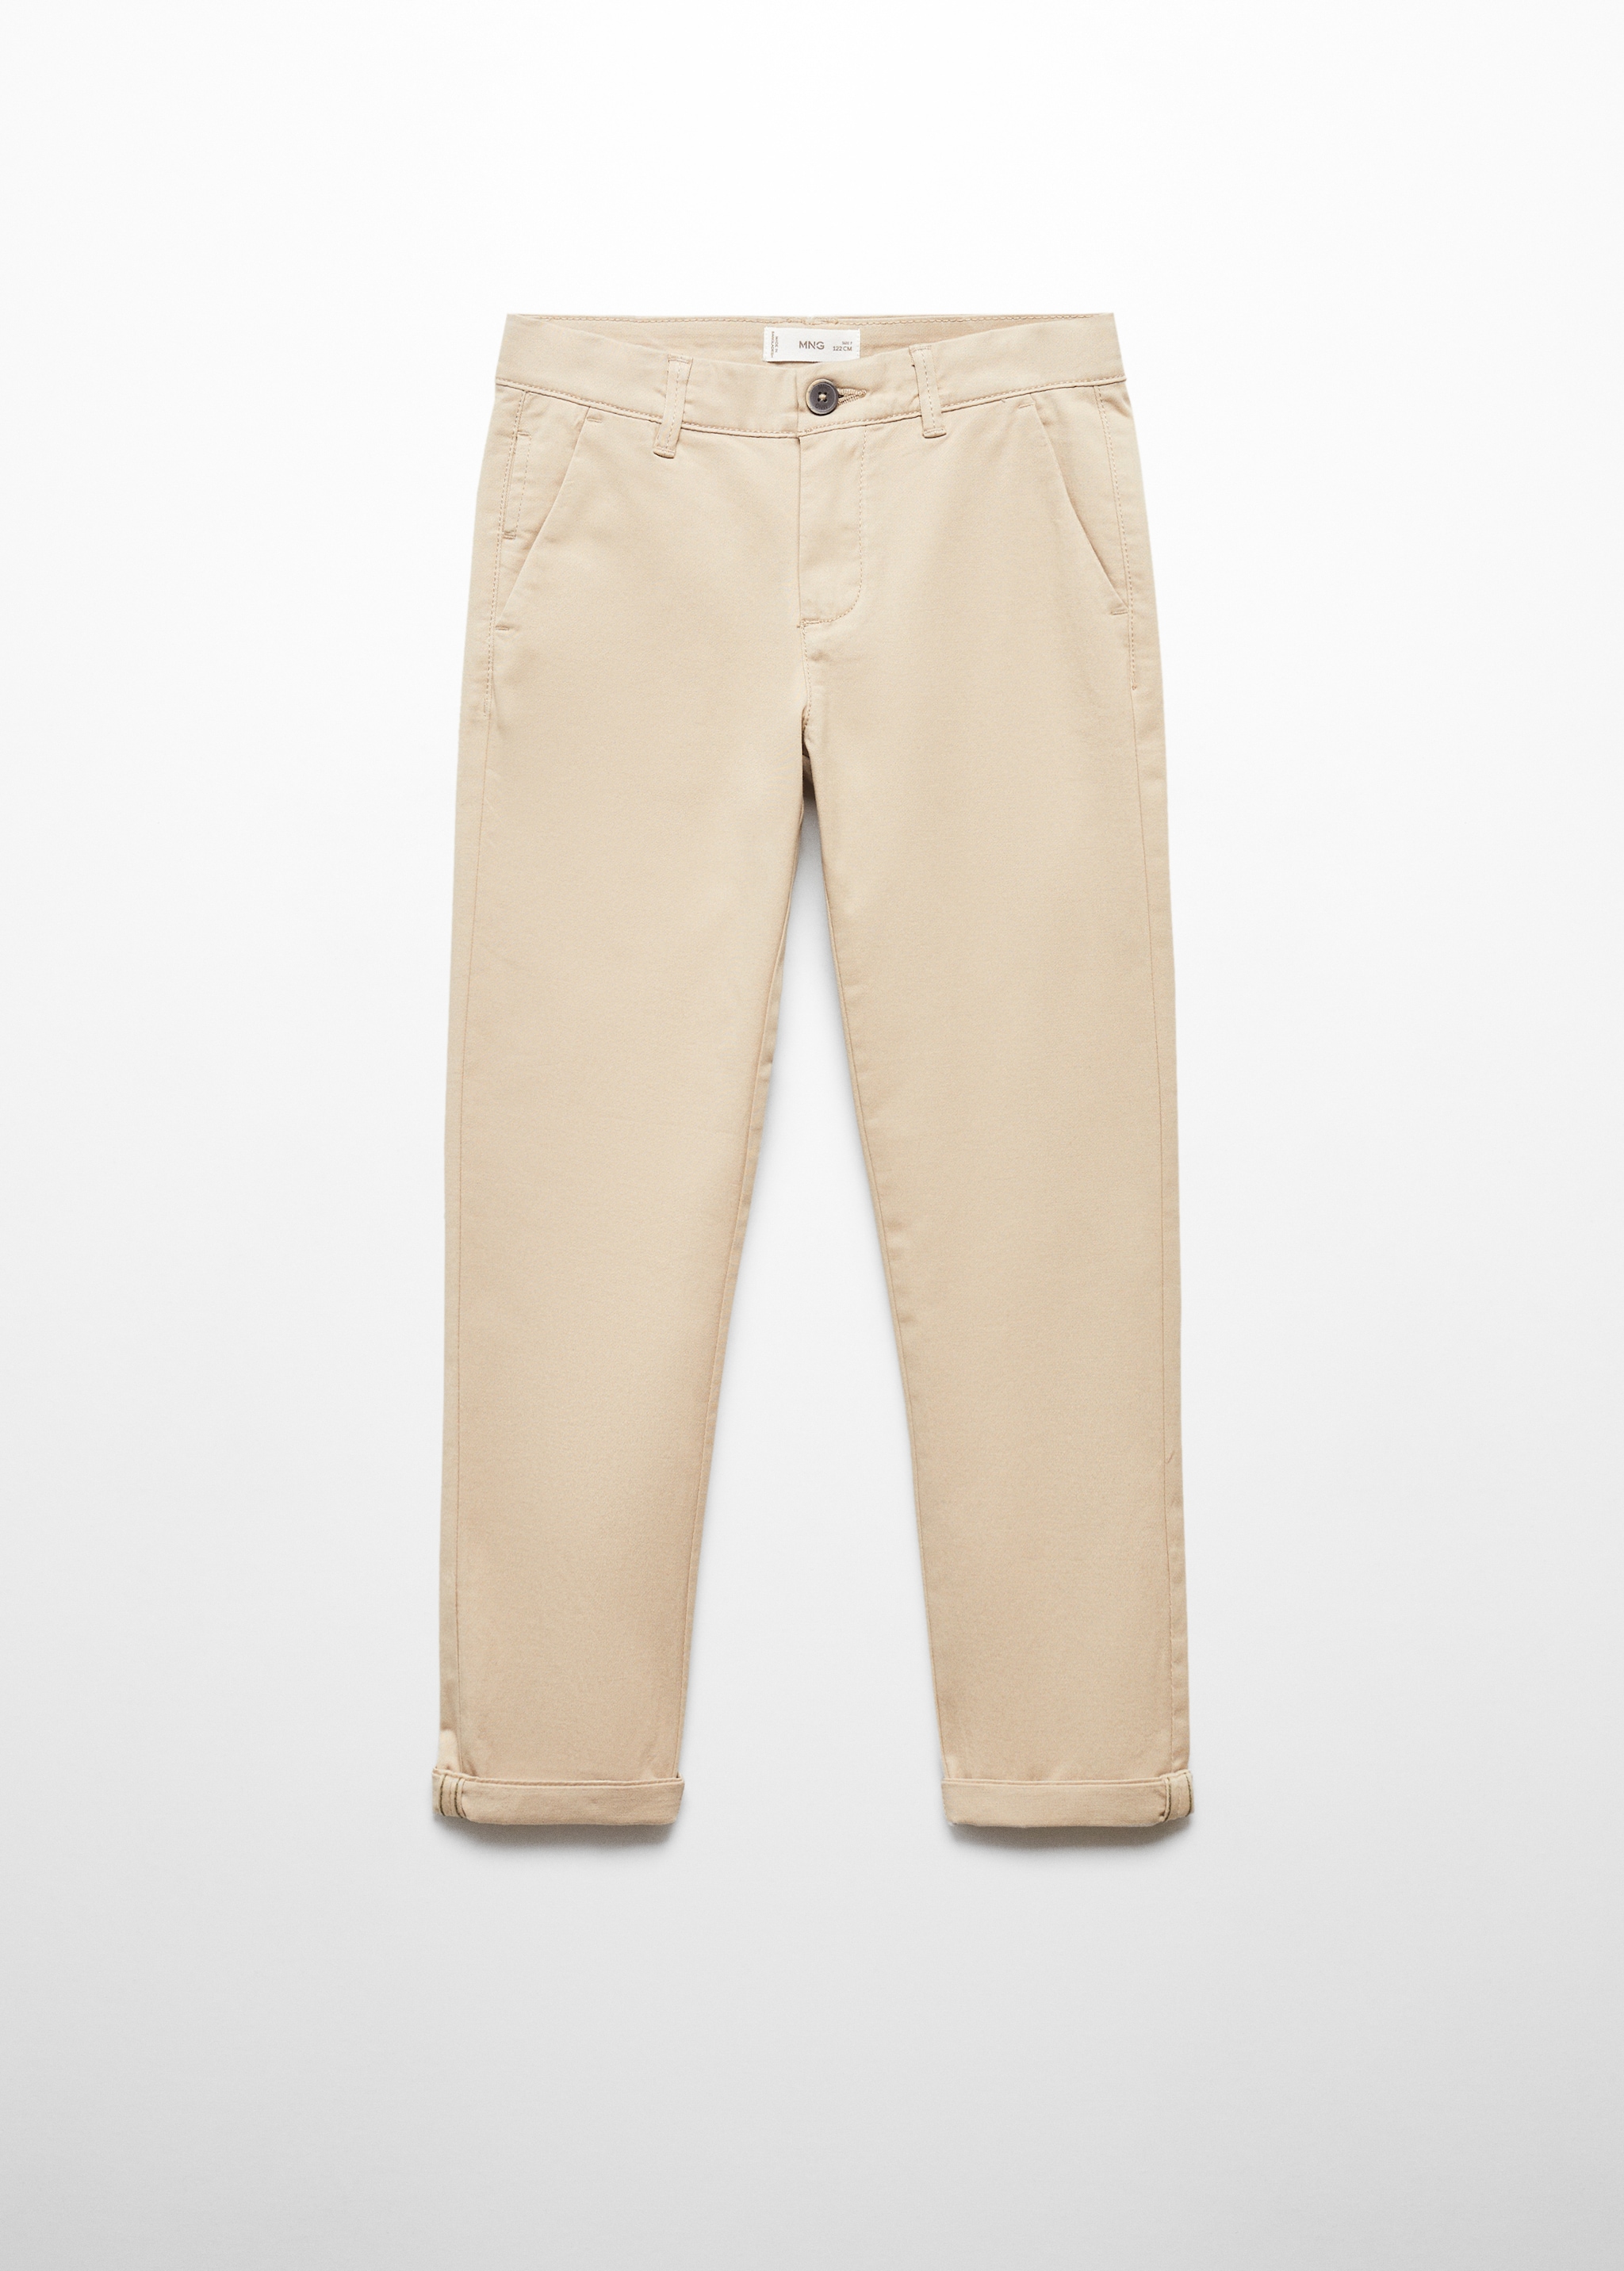 Pantalón chino algodón  - Artículo sin modelo